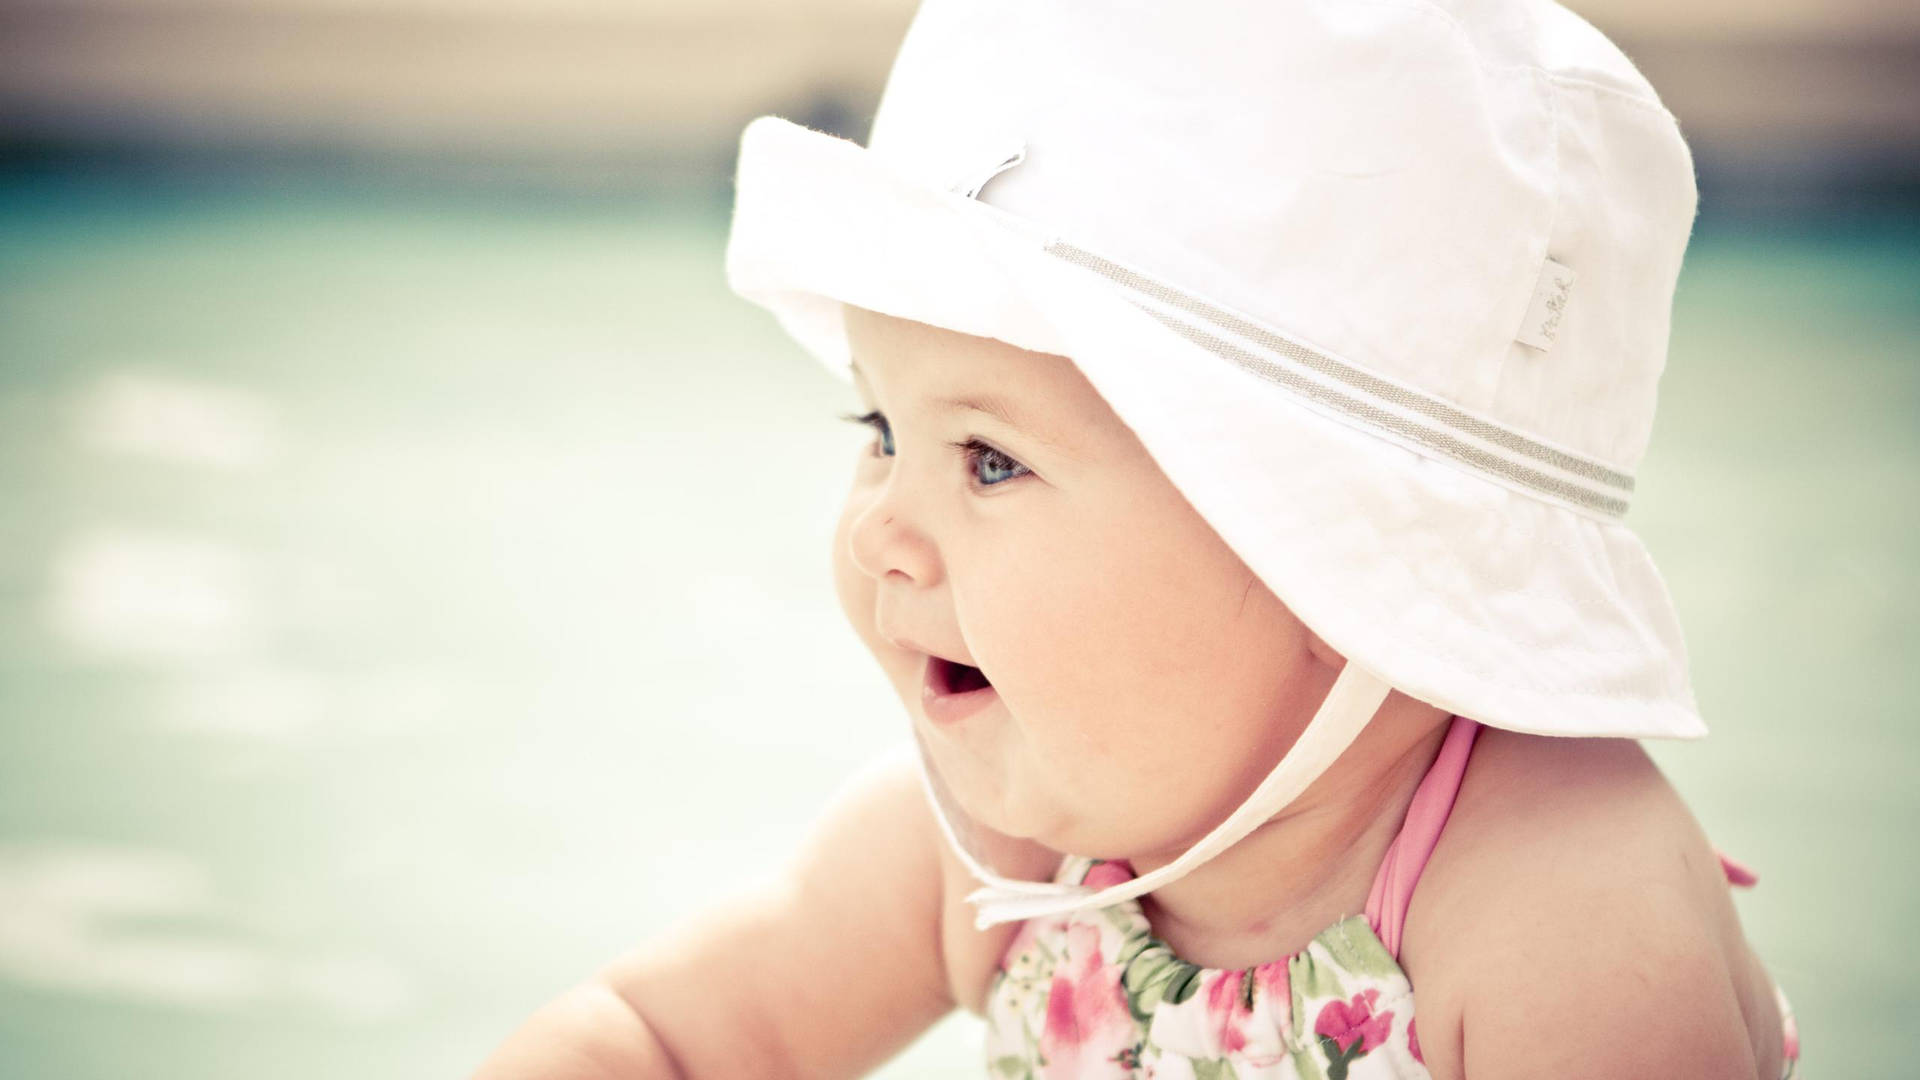 Free Cute Baby Girl Wallpaper Downloads, [100+] Cute Baby Girl Wallpapers  for FREE 